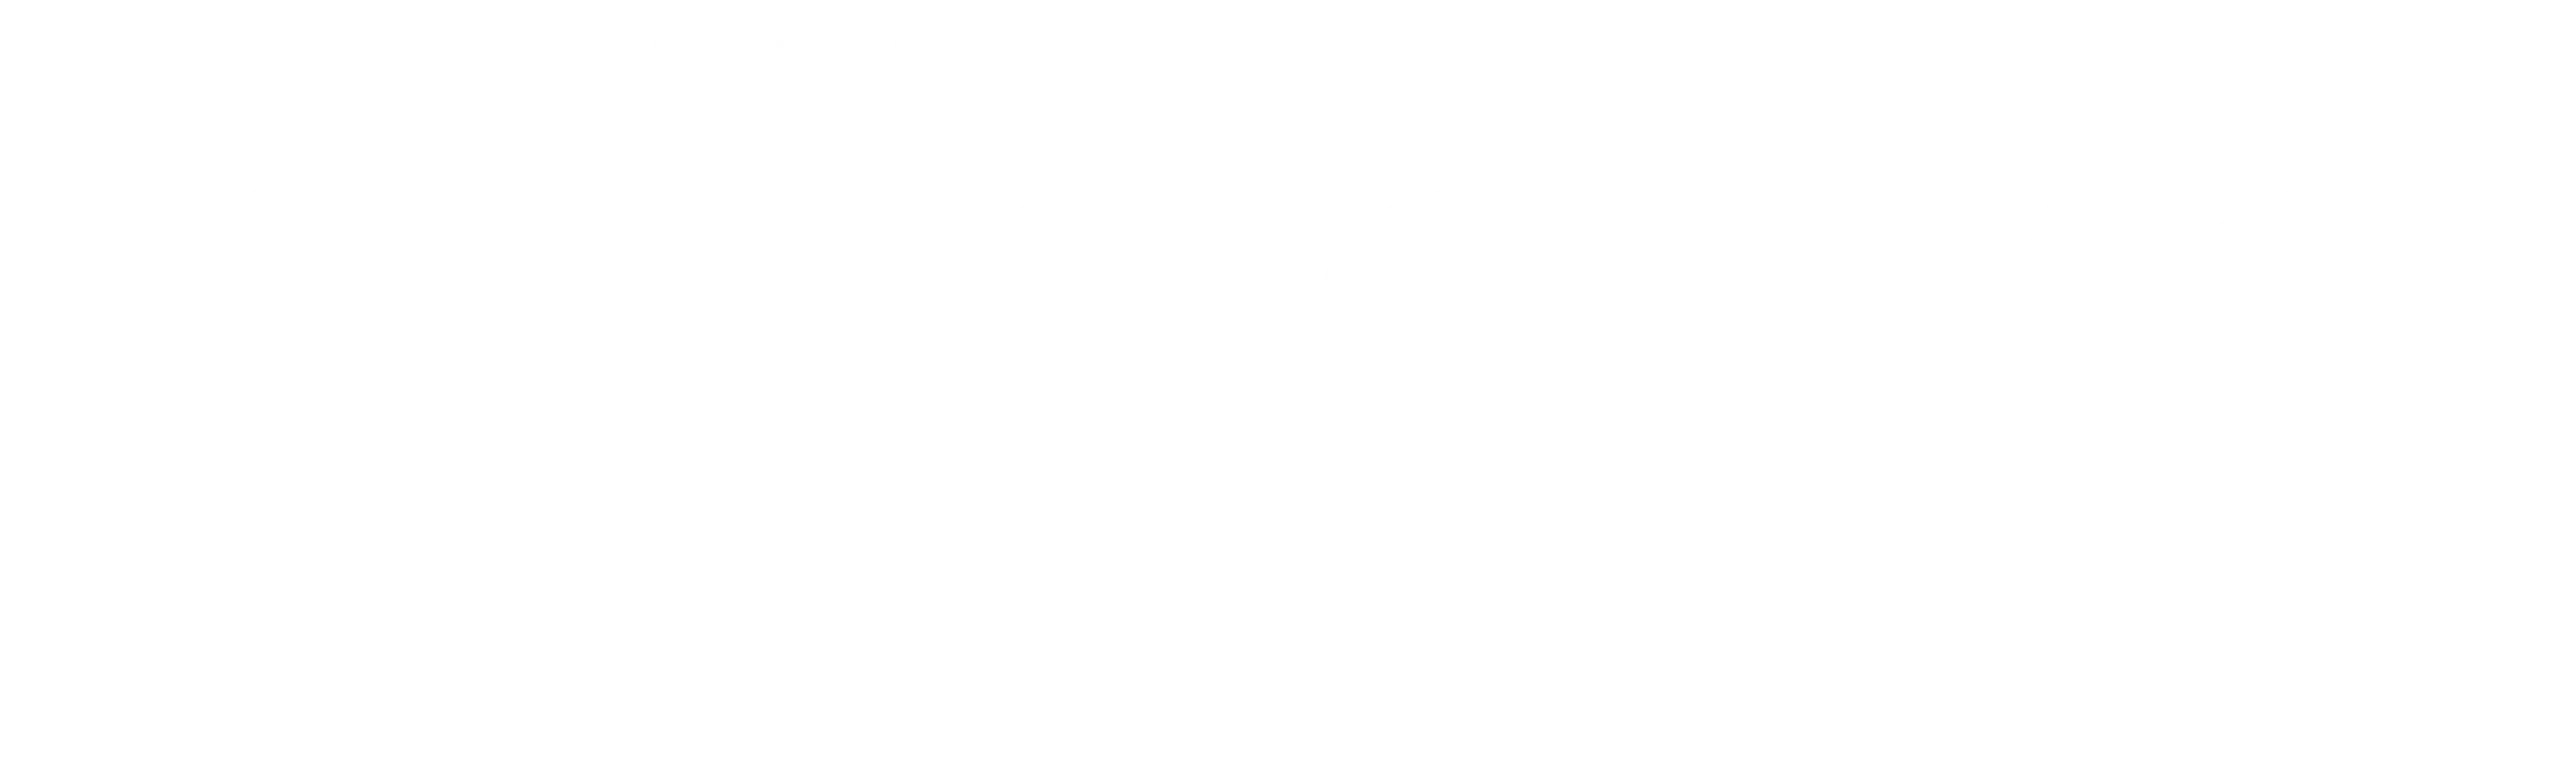 Libysn Logo Podcasting White